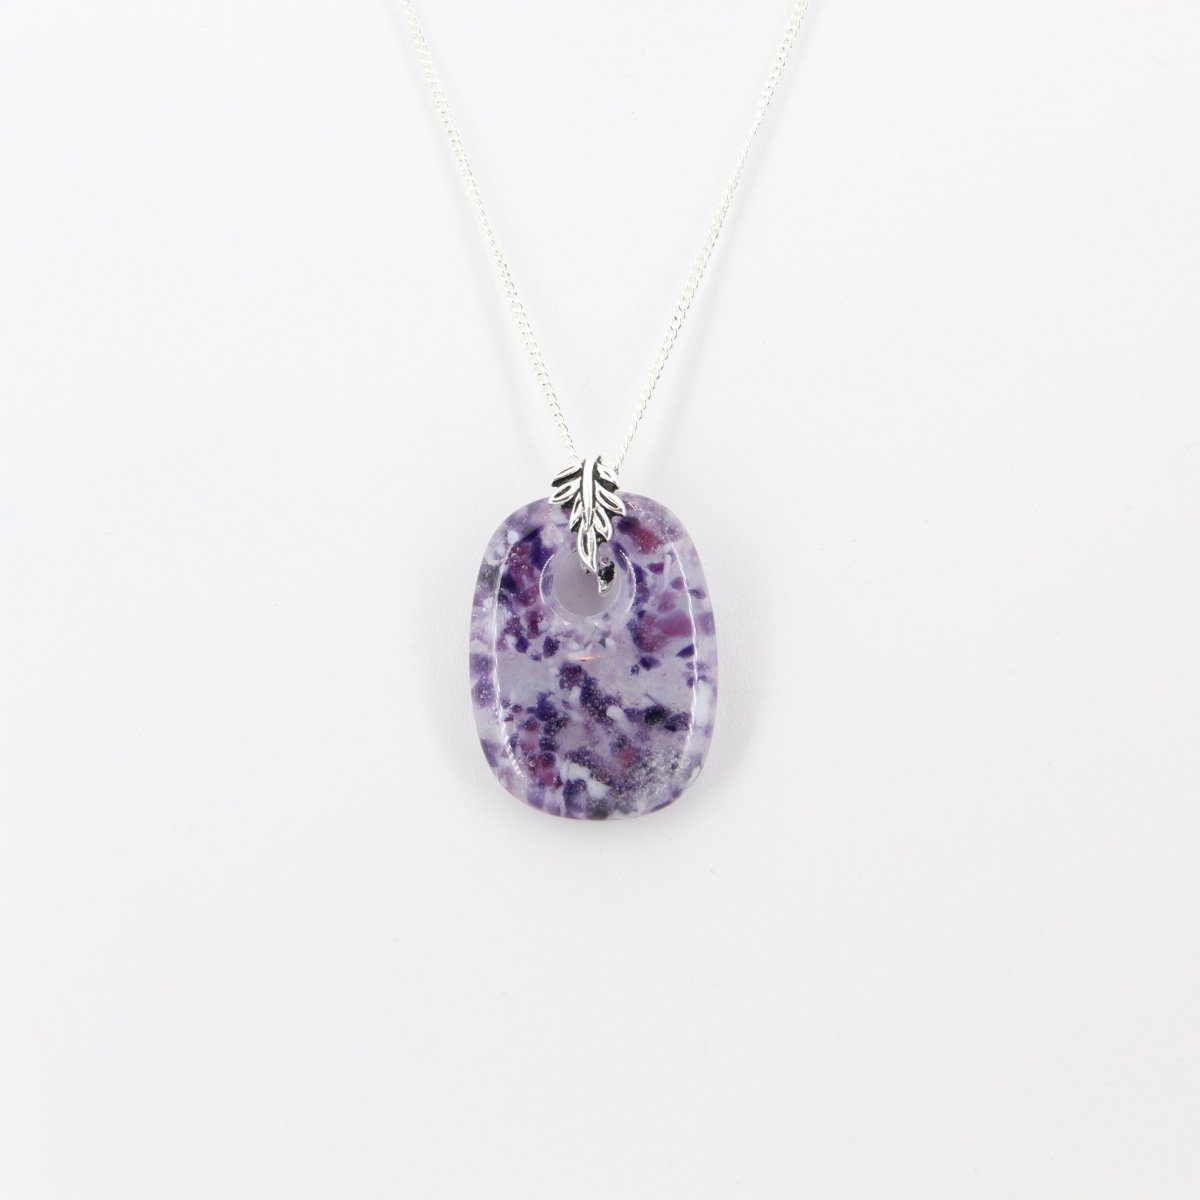 Speckled Purple Glass Pendant